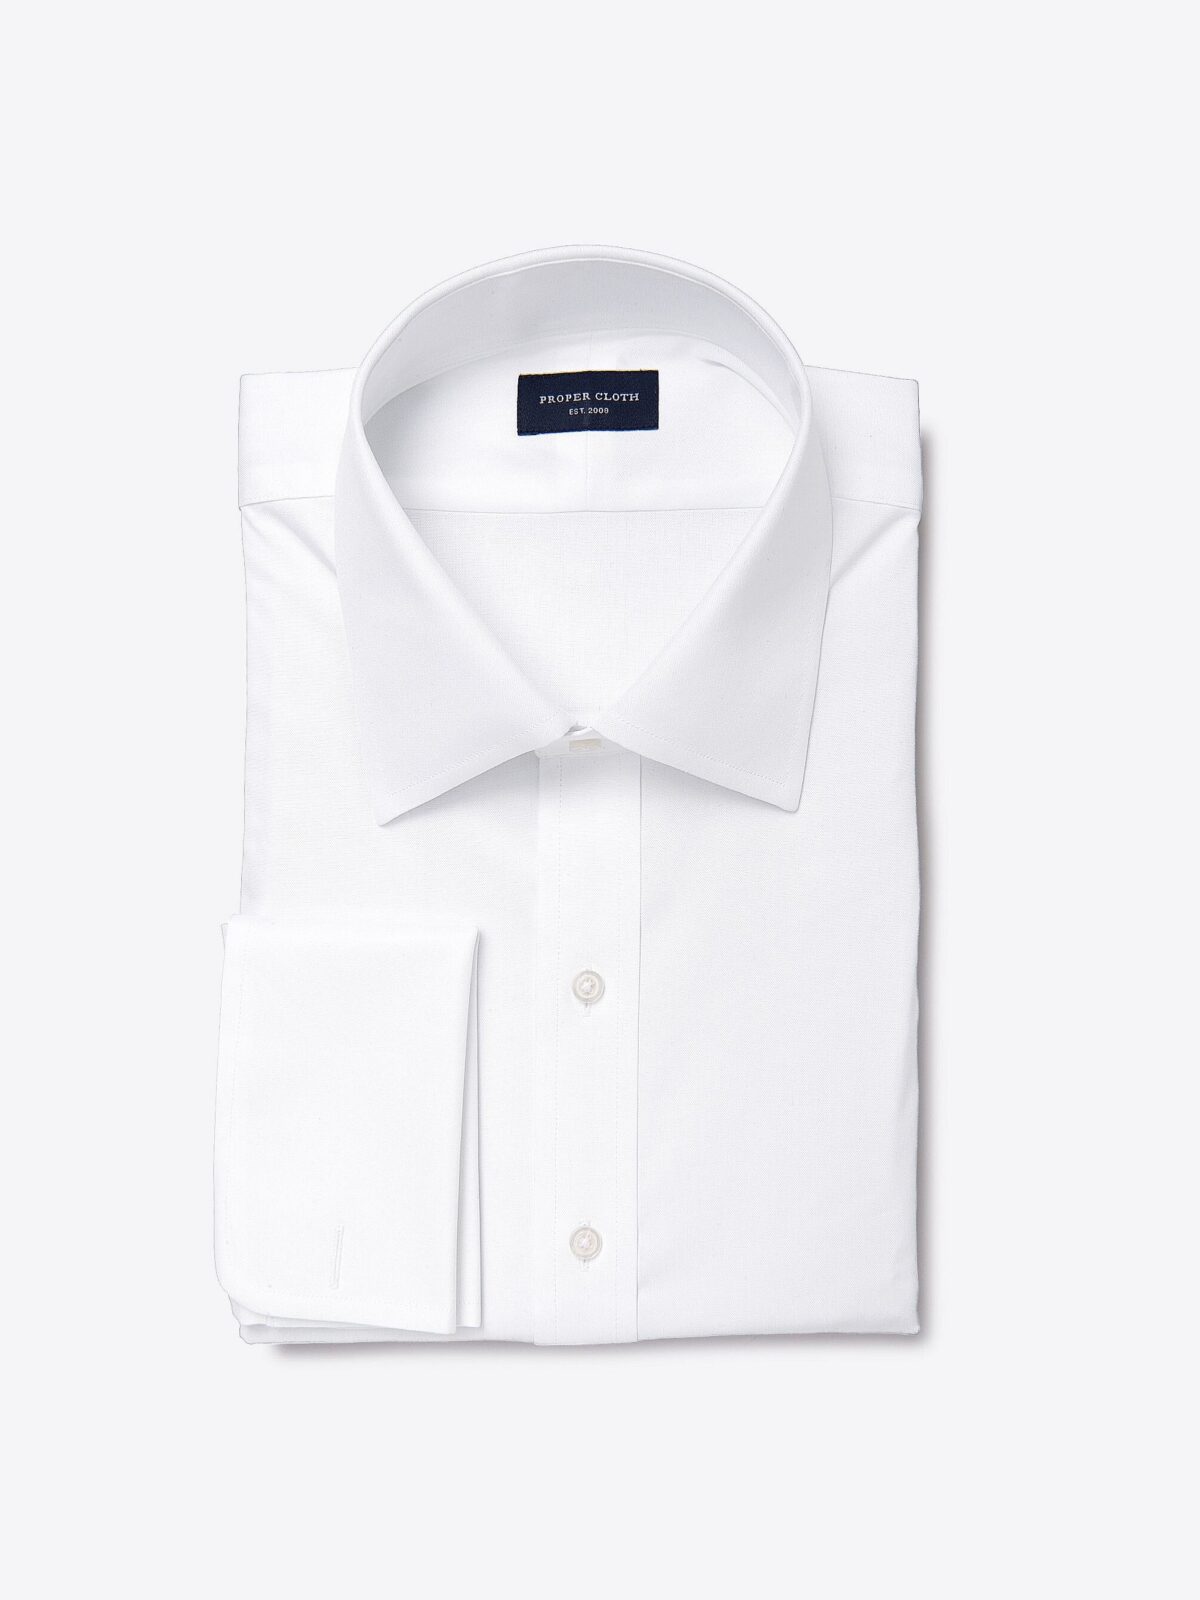 Non-Iron Supima White Pinpoint Custom Dress Shirt Shirt by Proper Cloth